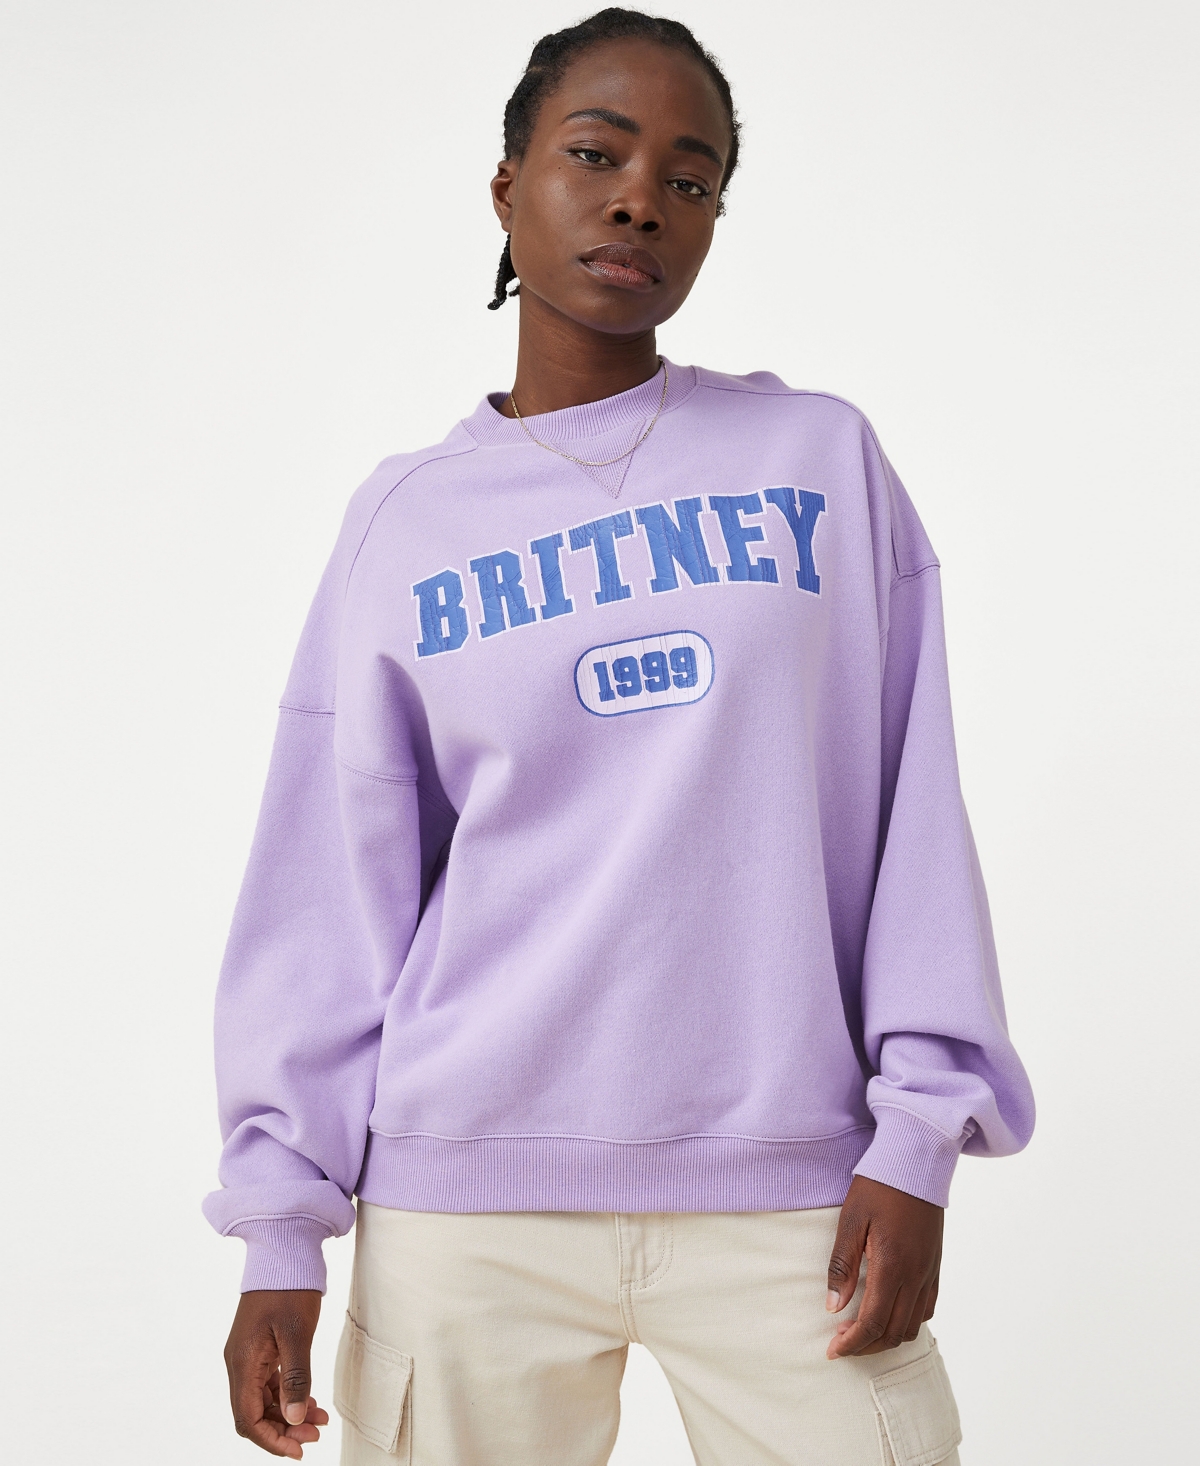 Cotton On Women's Britney Spears Crew Sweatshirt